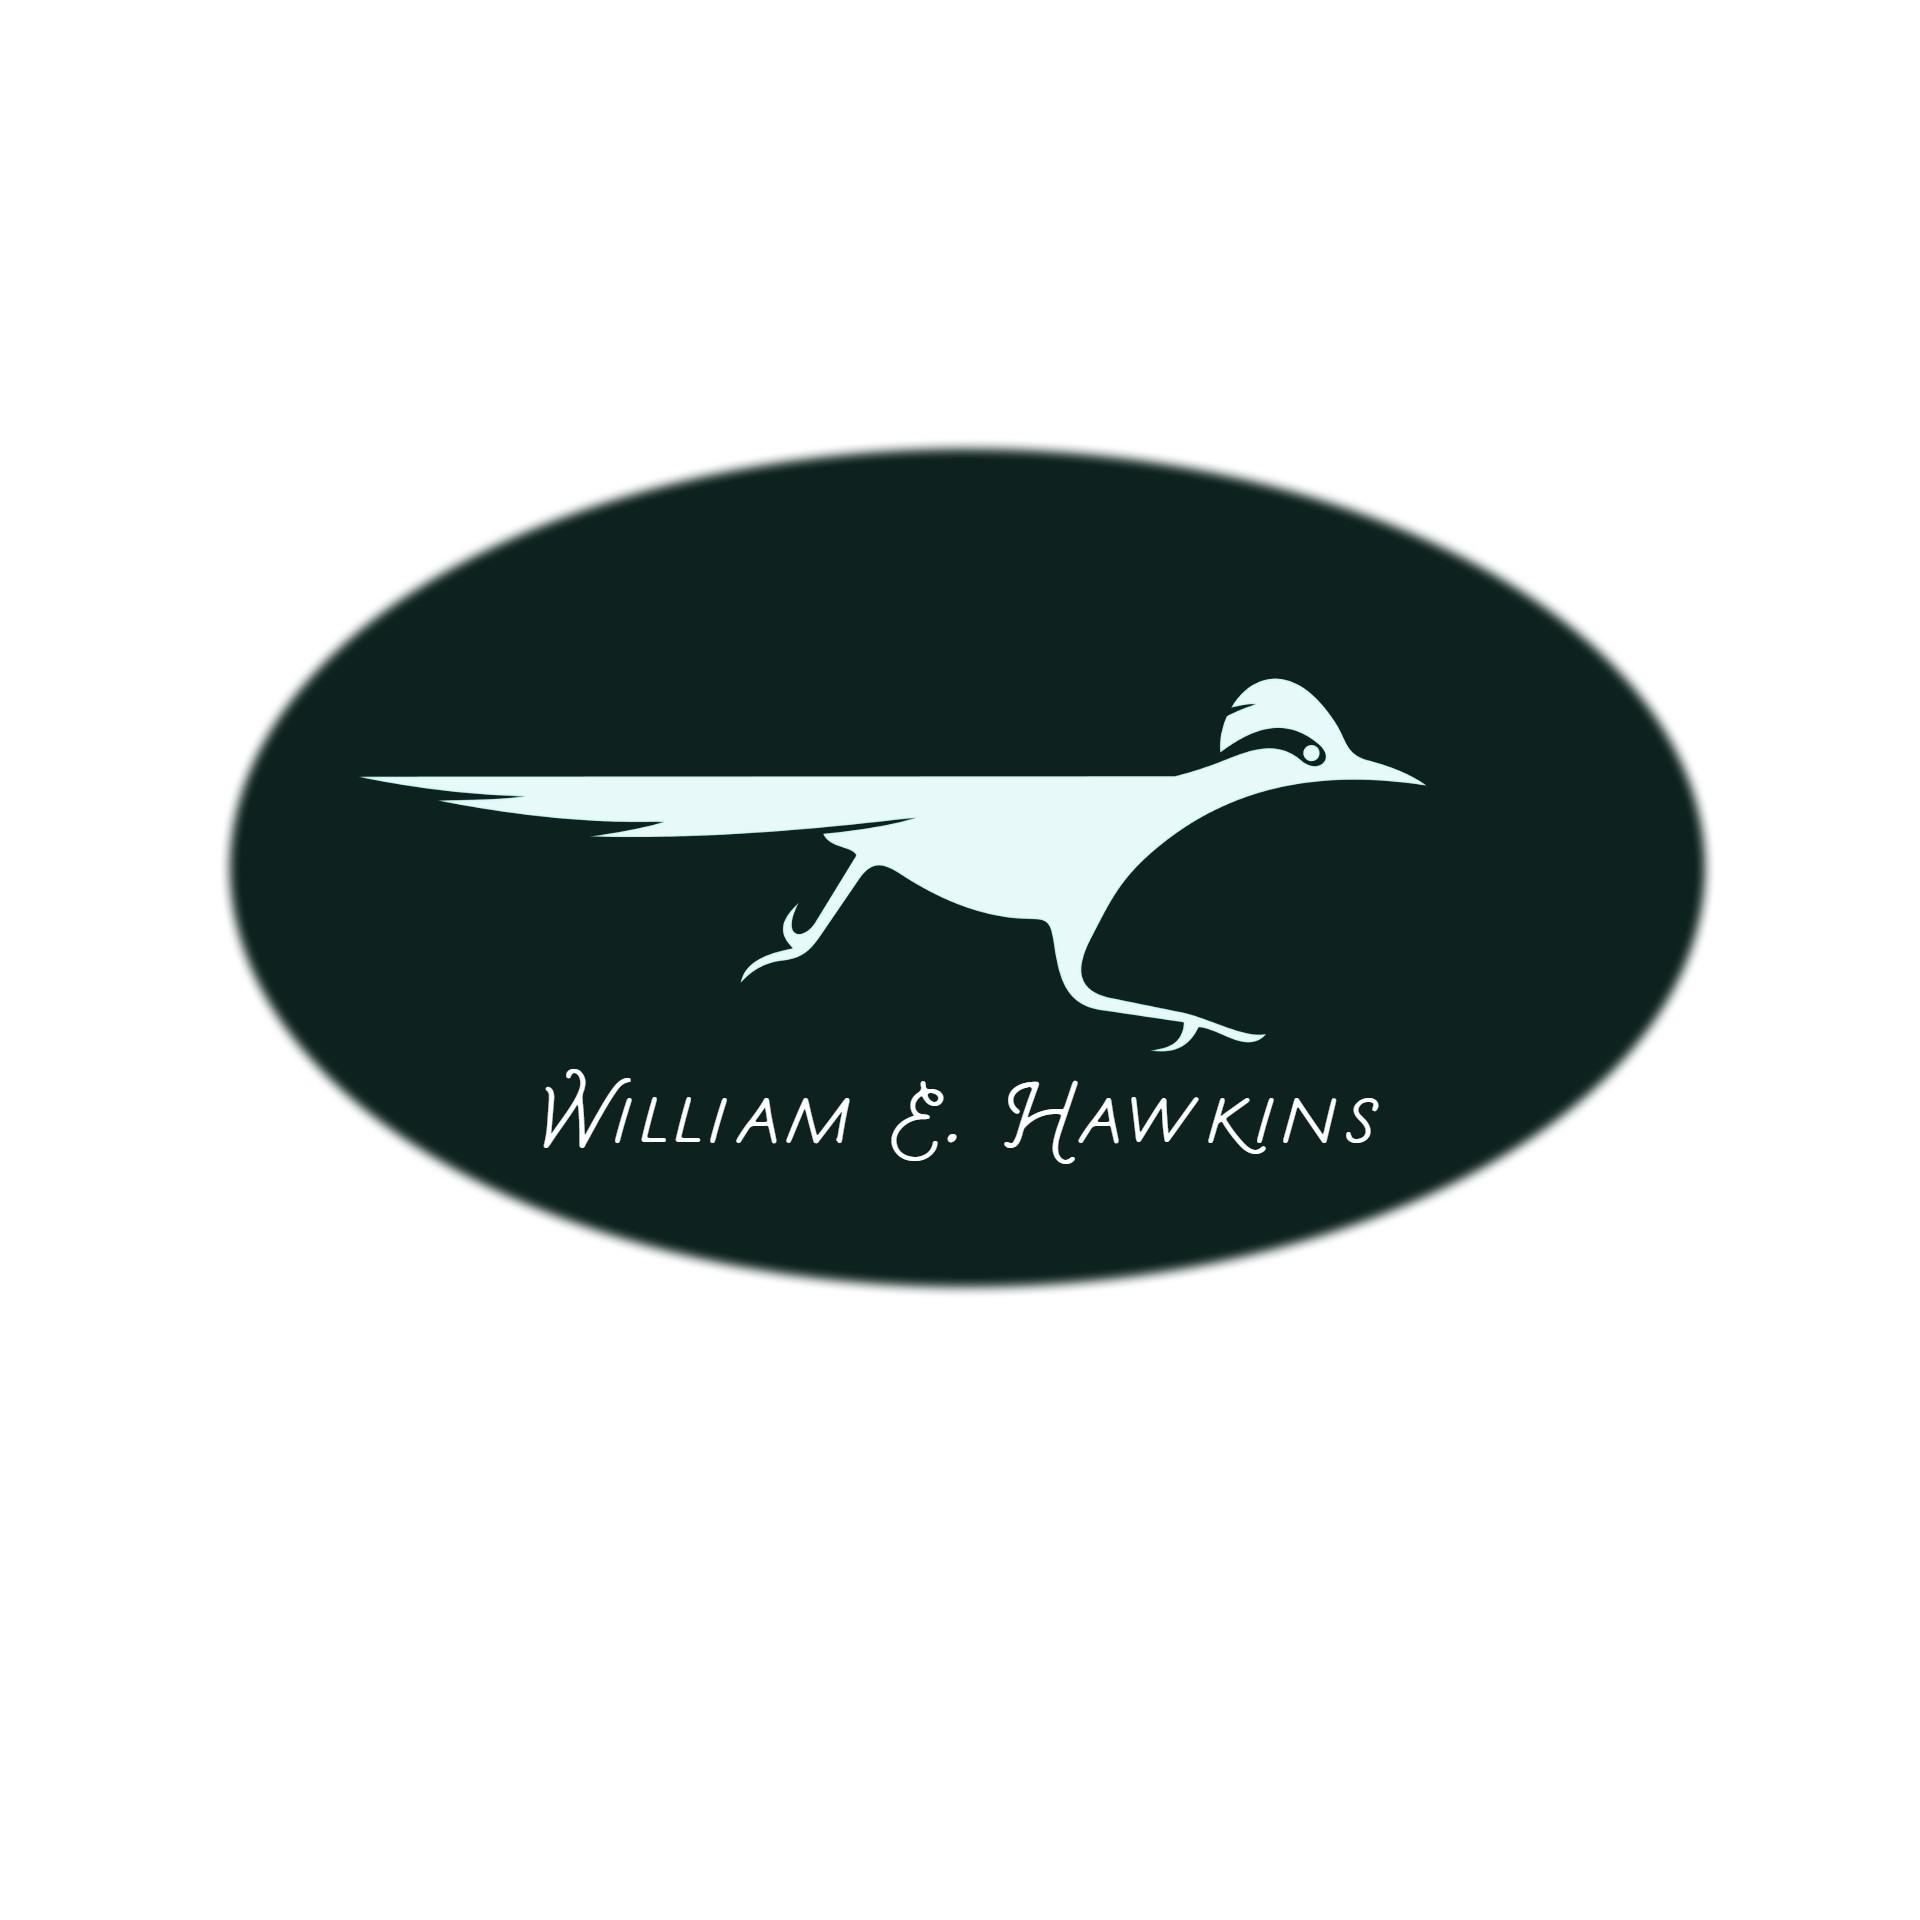 William E. Hawkins Logo